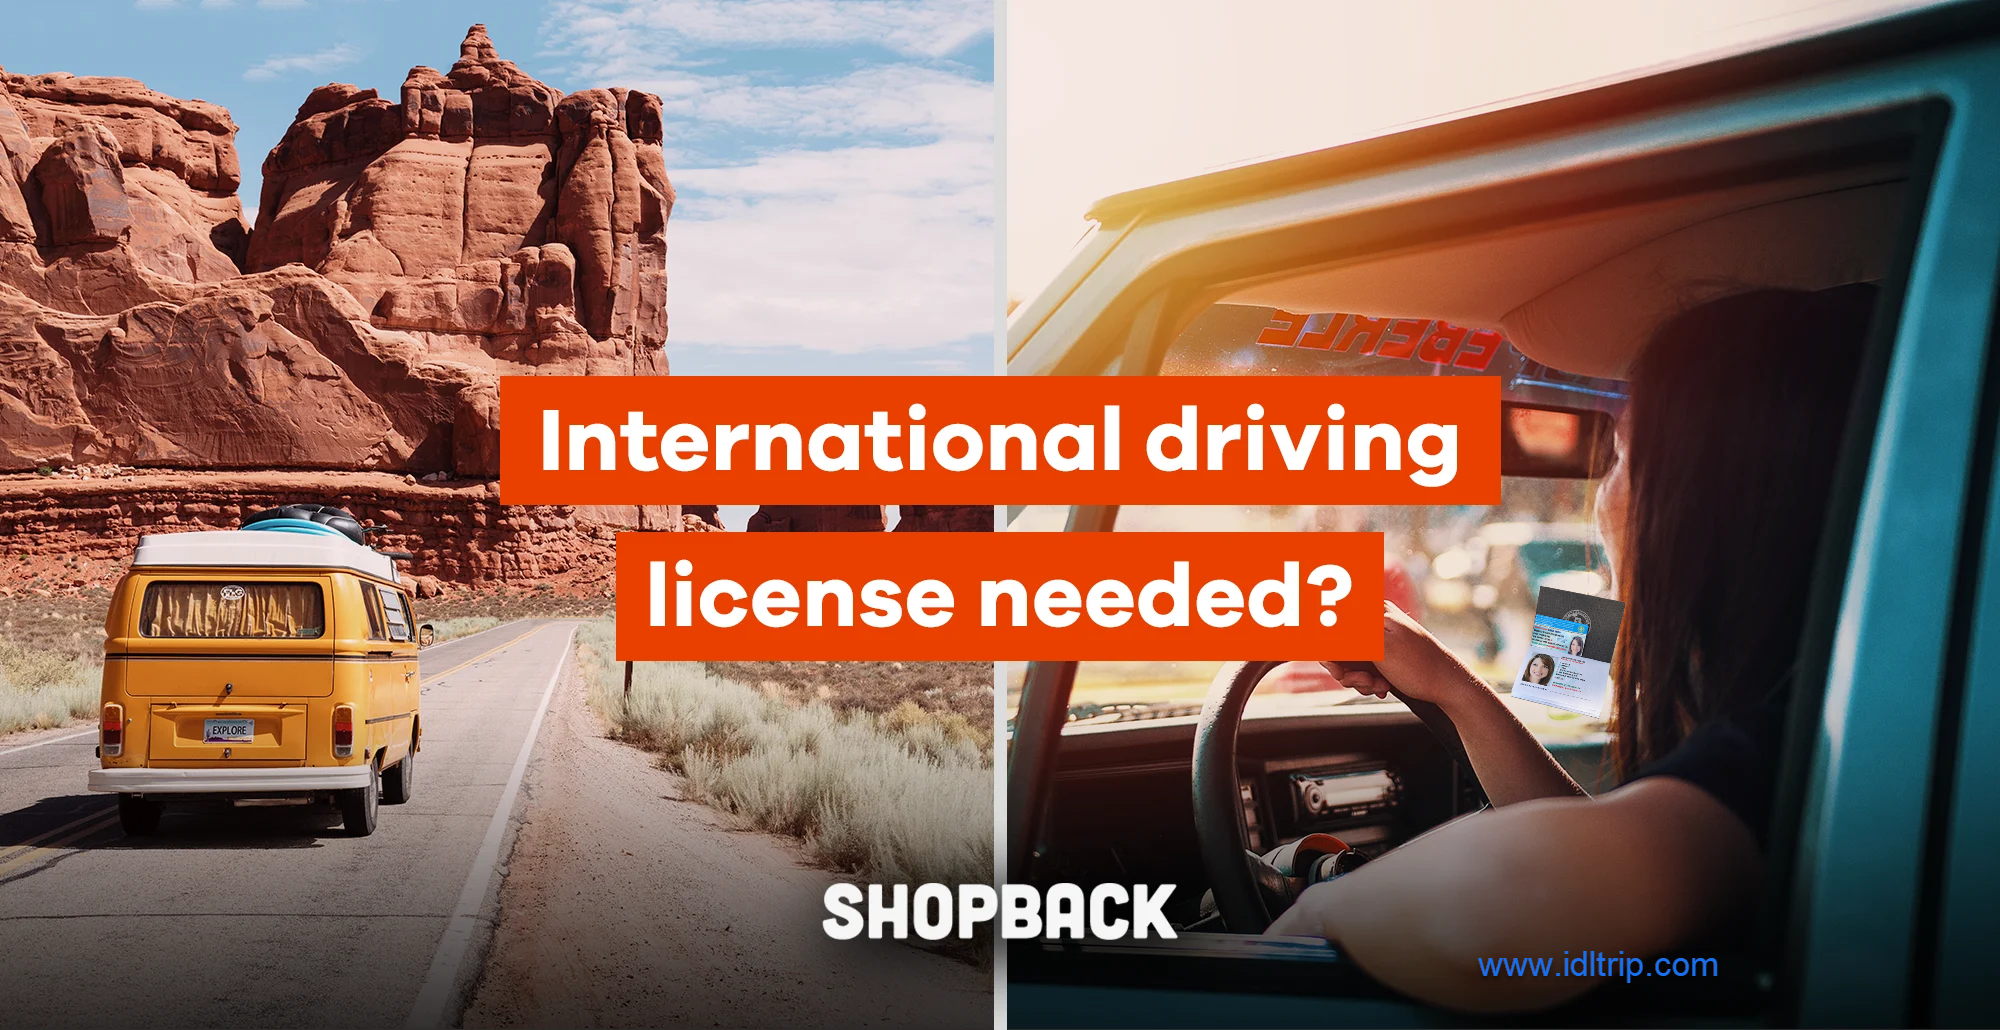 Getting an International Driving License